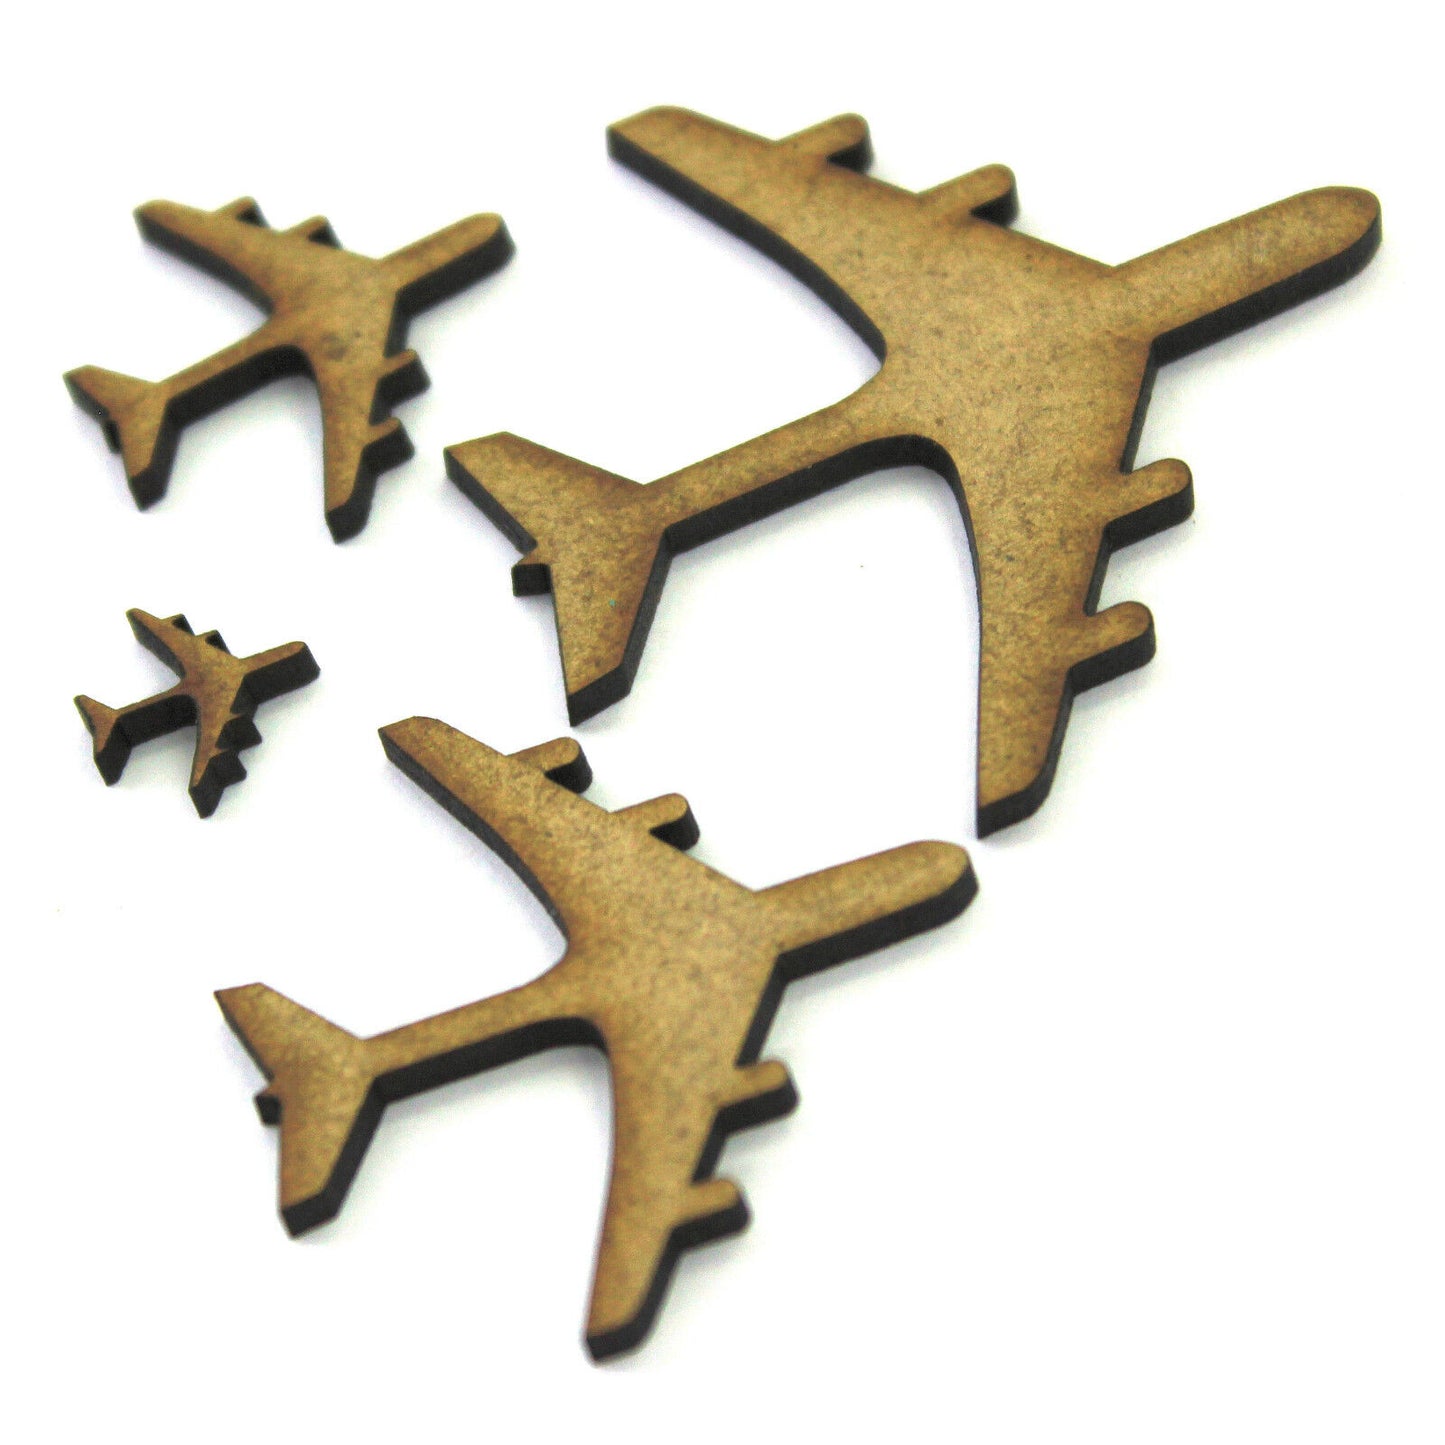 Aeroplane / Plane Shapes, Embellishments, Decorations, 2mm MDF Wood.